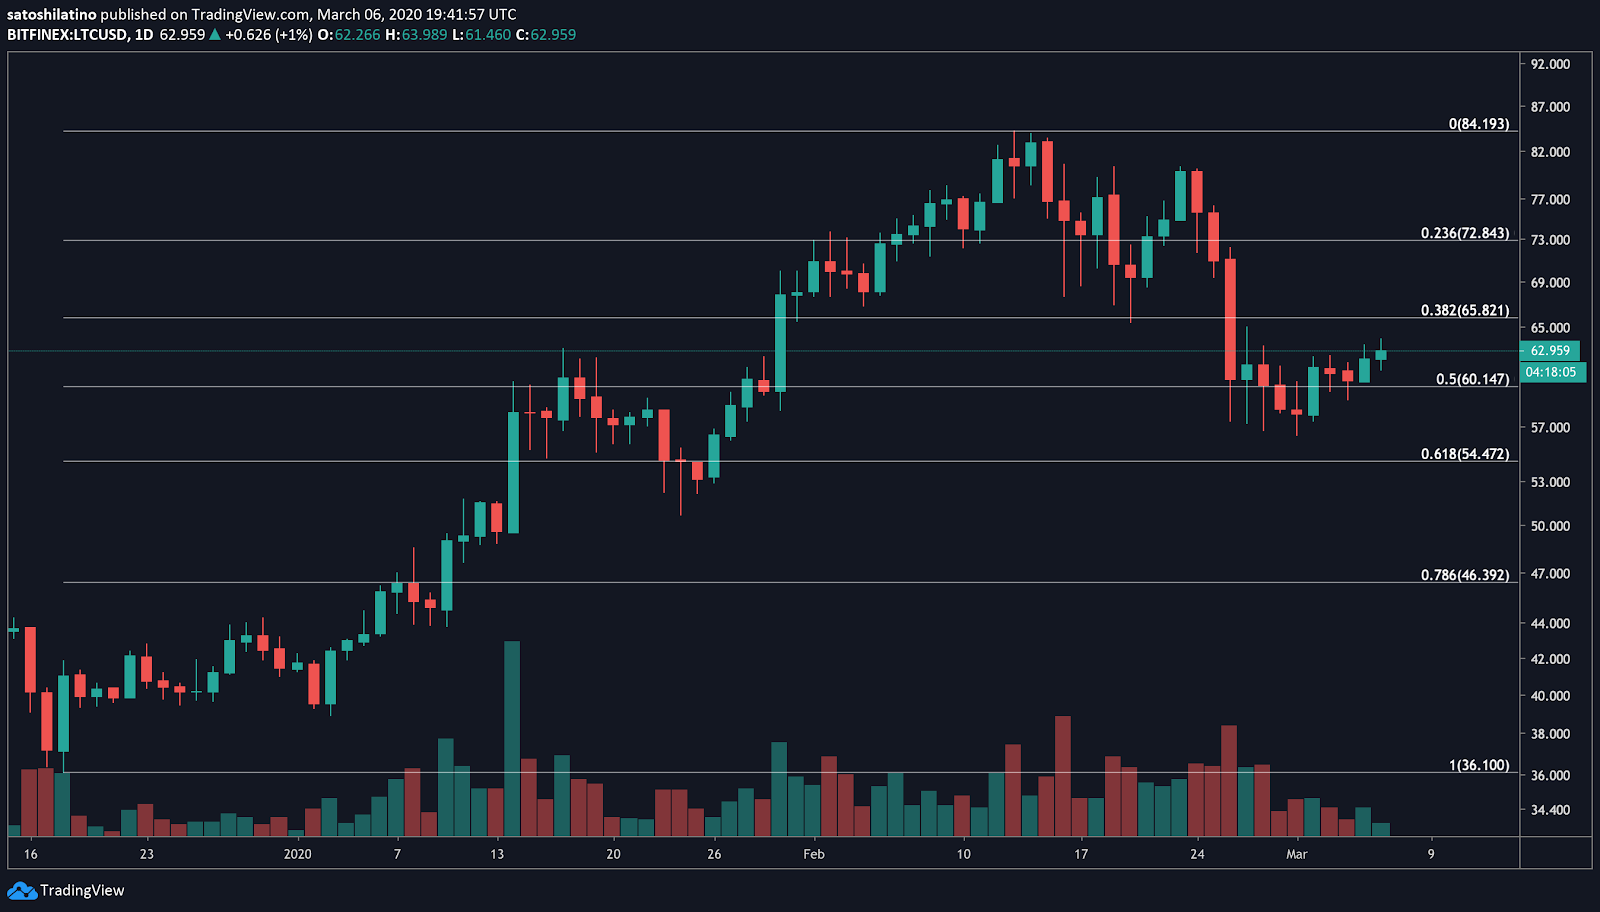 Litecoin / USD price chart on TradingView